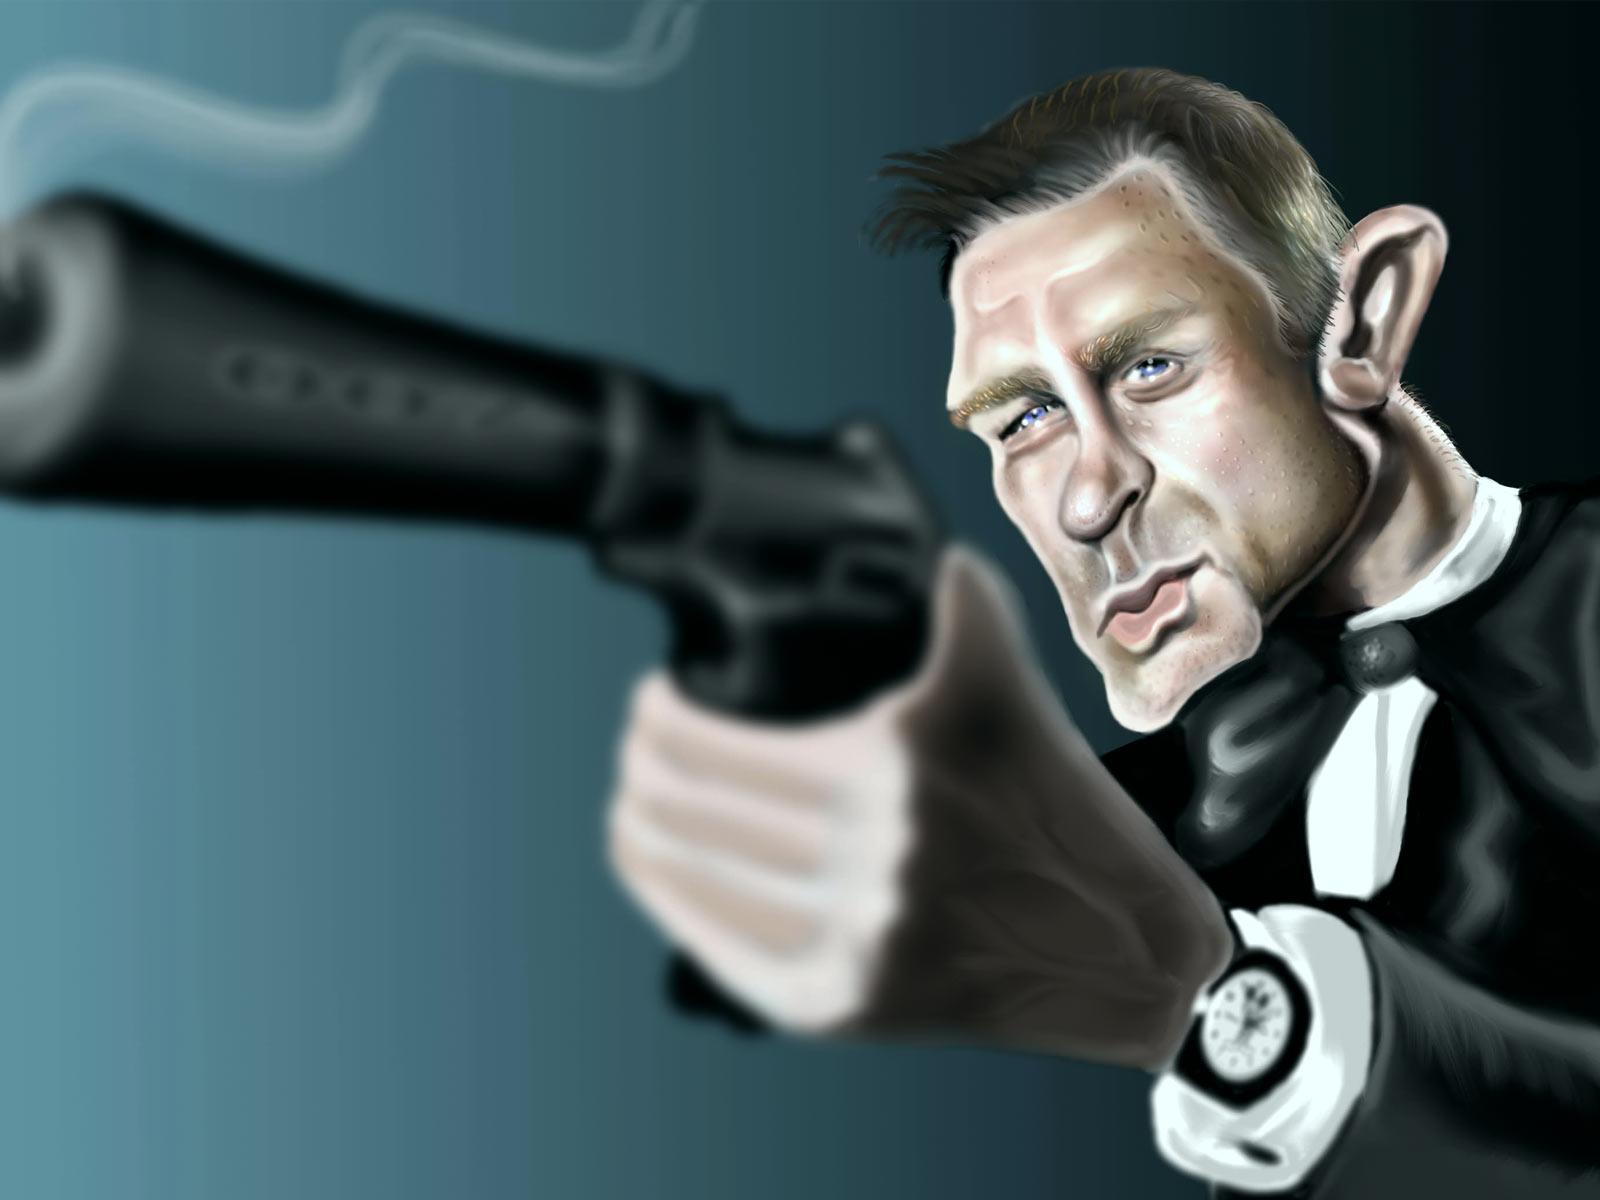 James Bond Background Image